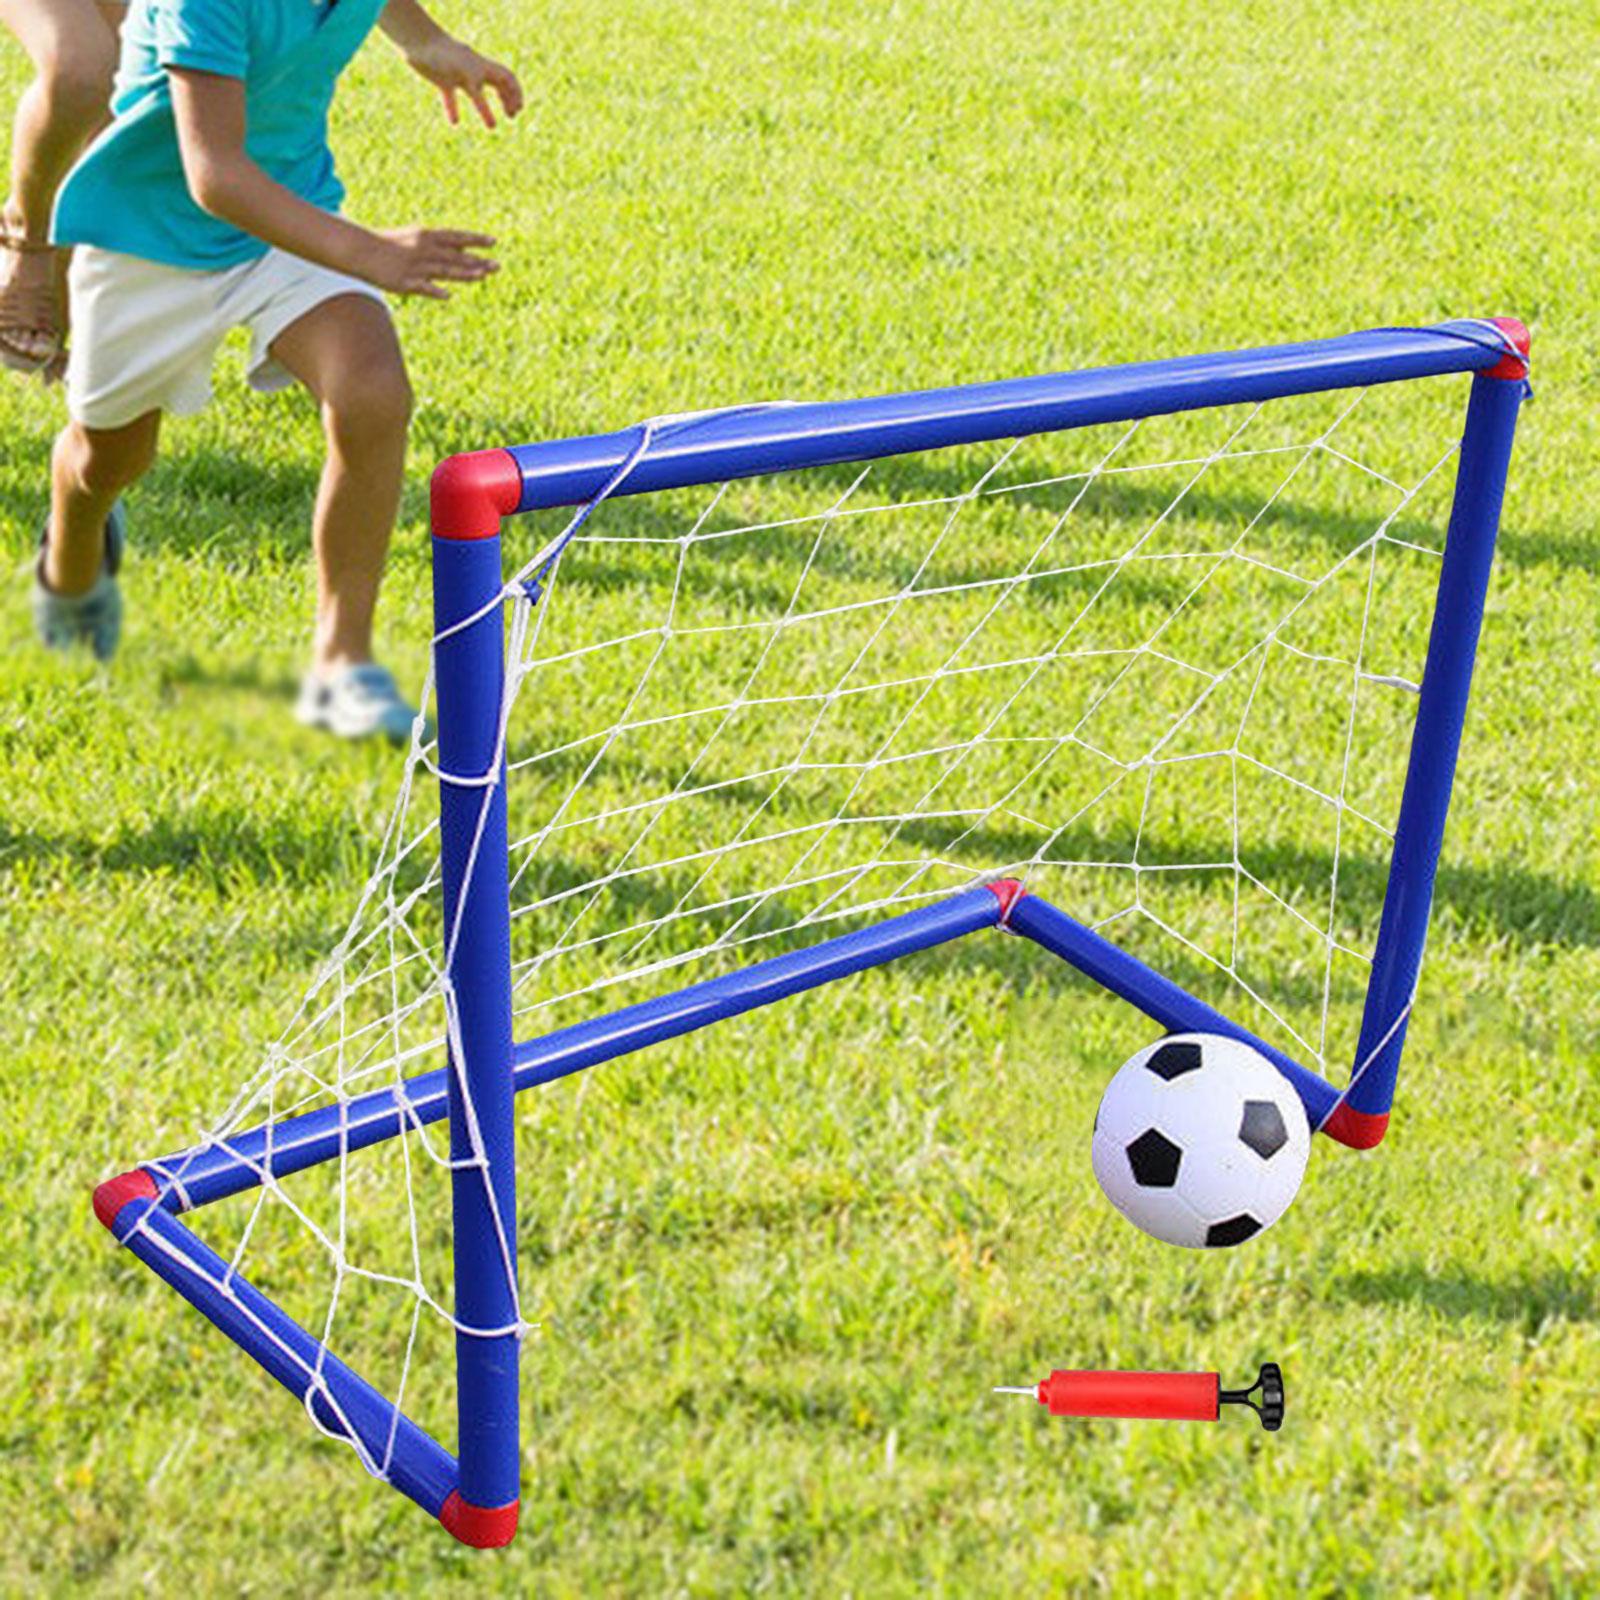 Kids Soccer Goals Soccer Nets Folding for Backyard Mini Playing Football Net  1 Soccer Ball